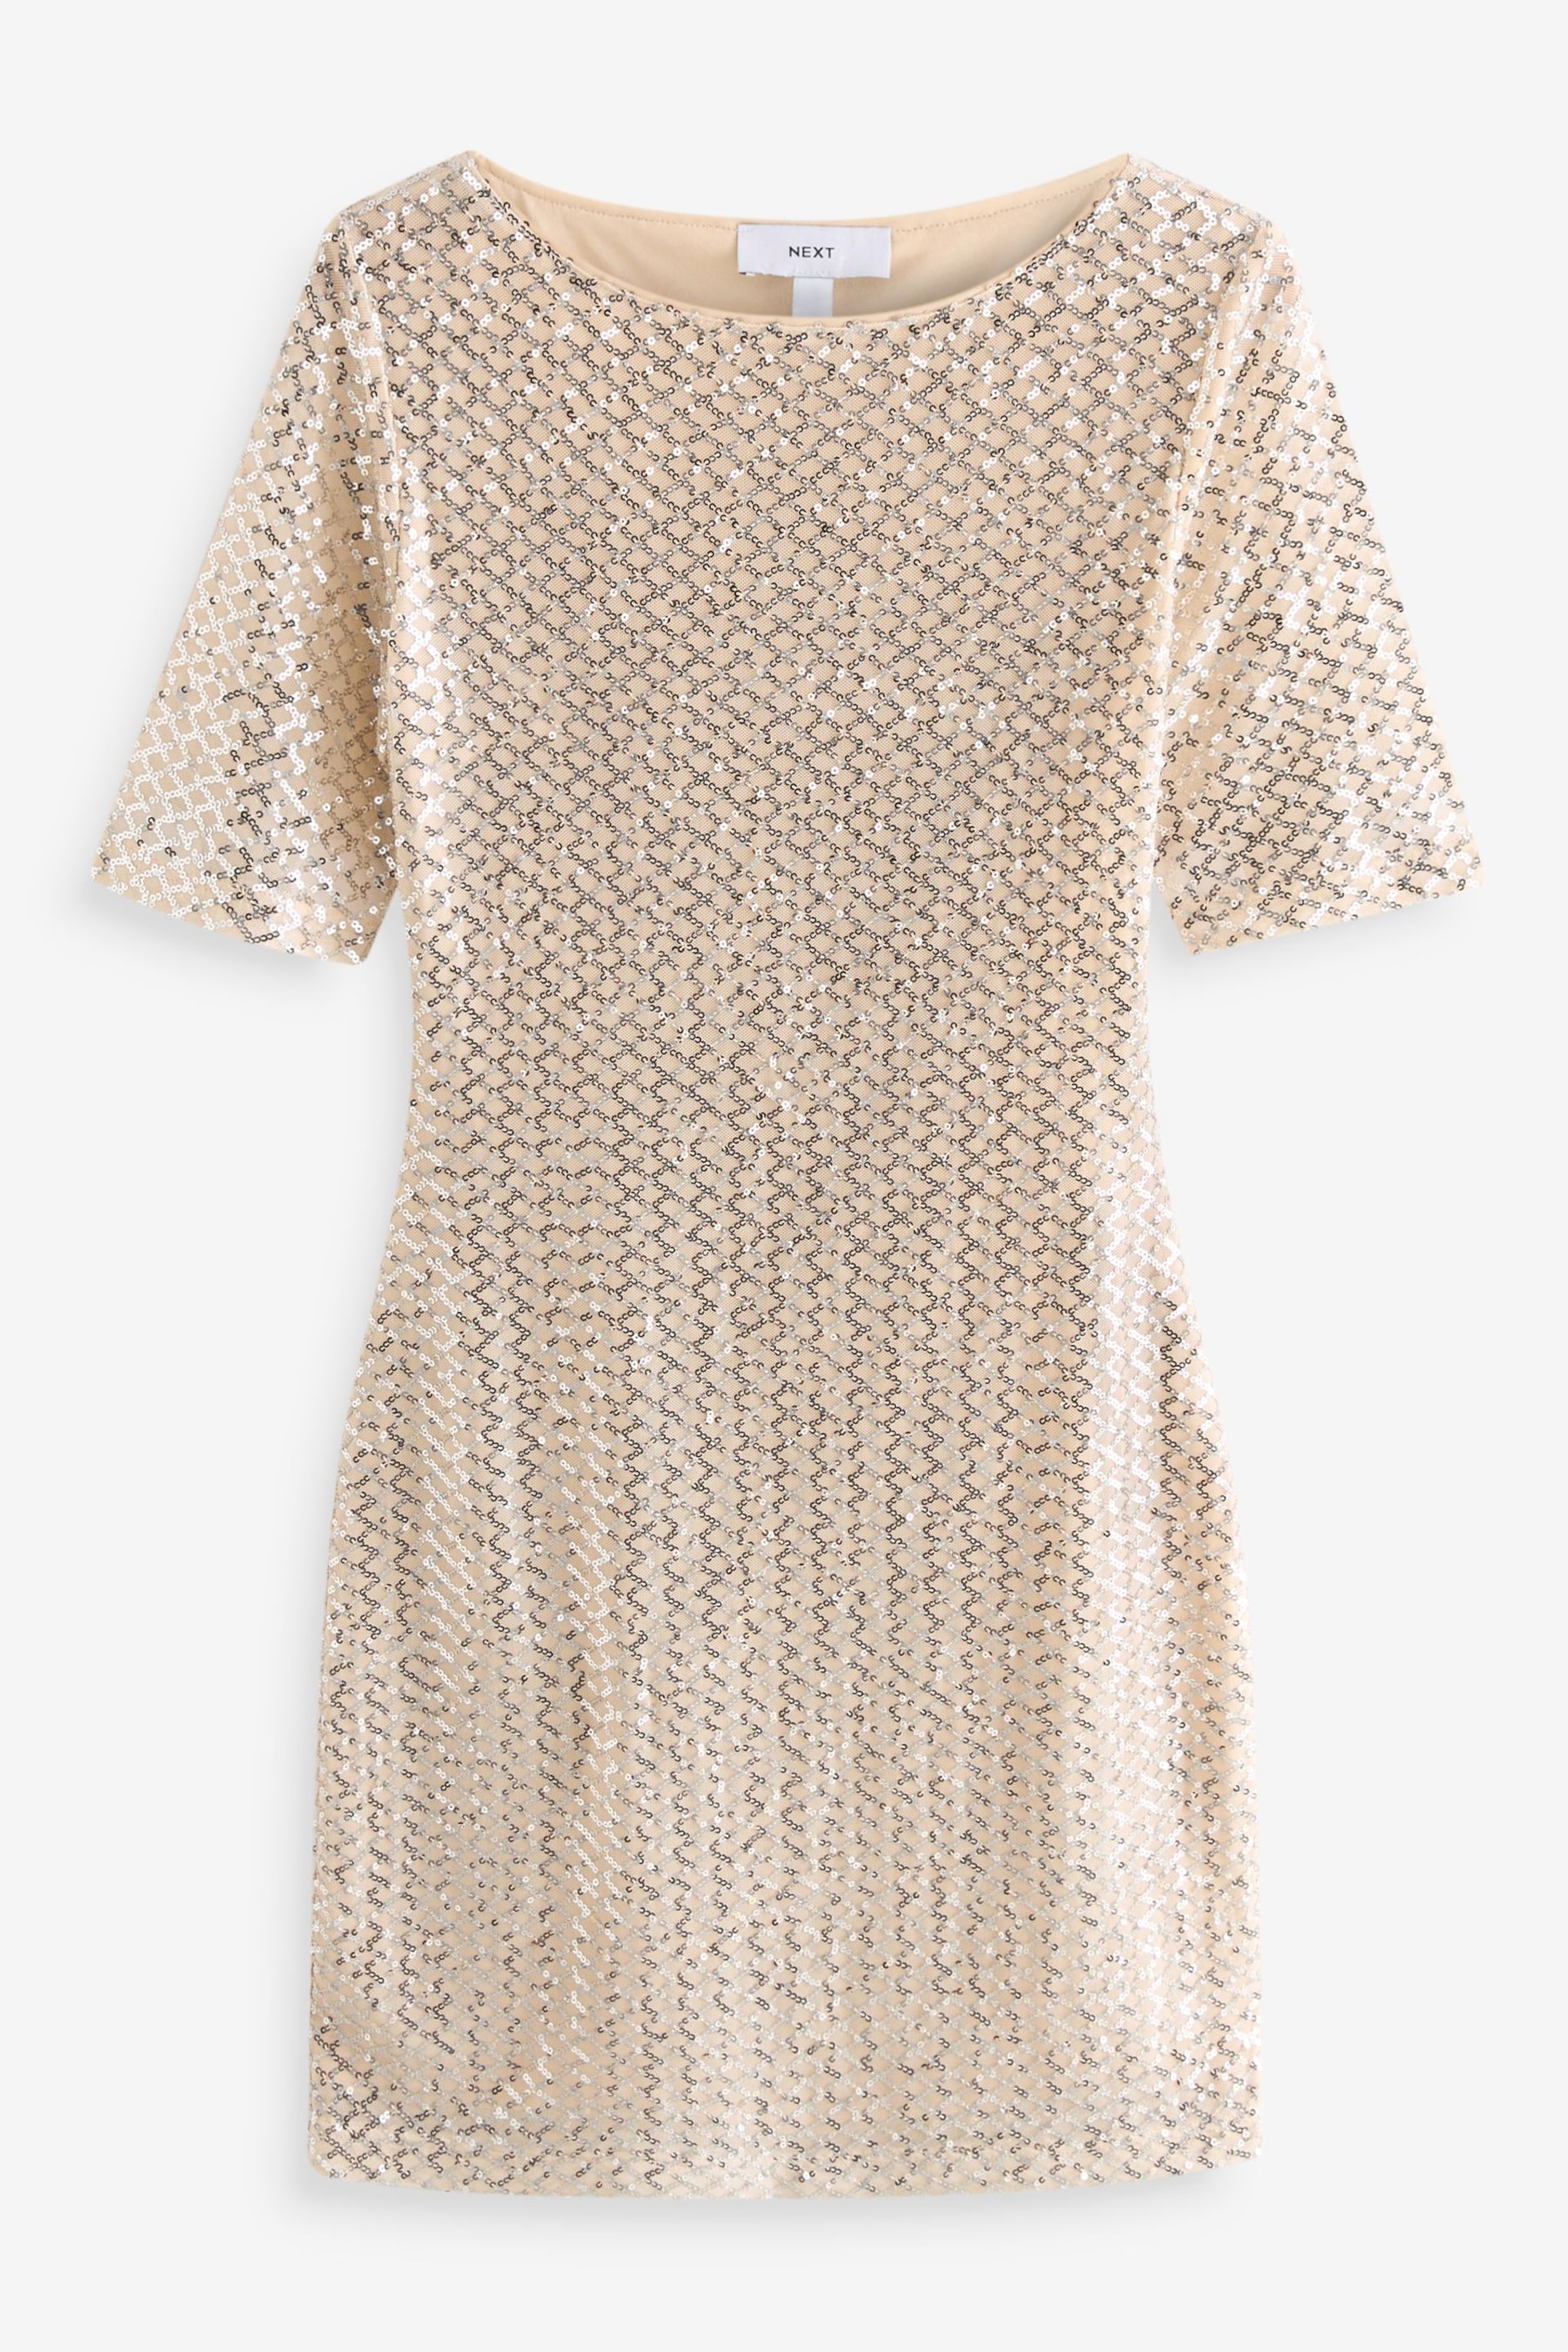 Cream Short Sleeve Sequin Dress - Image 6 of 7